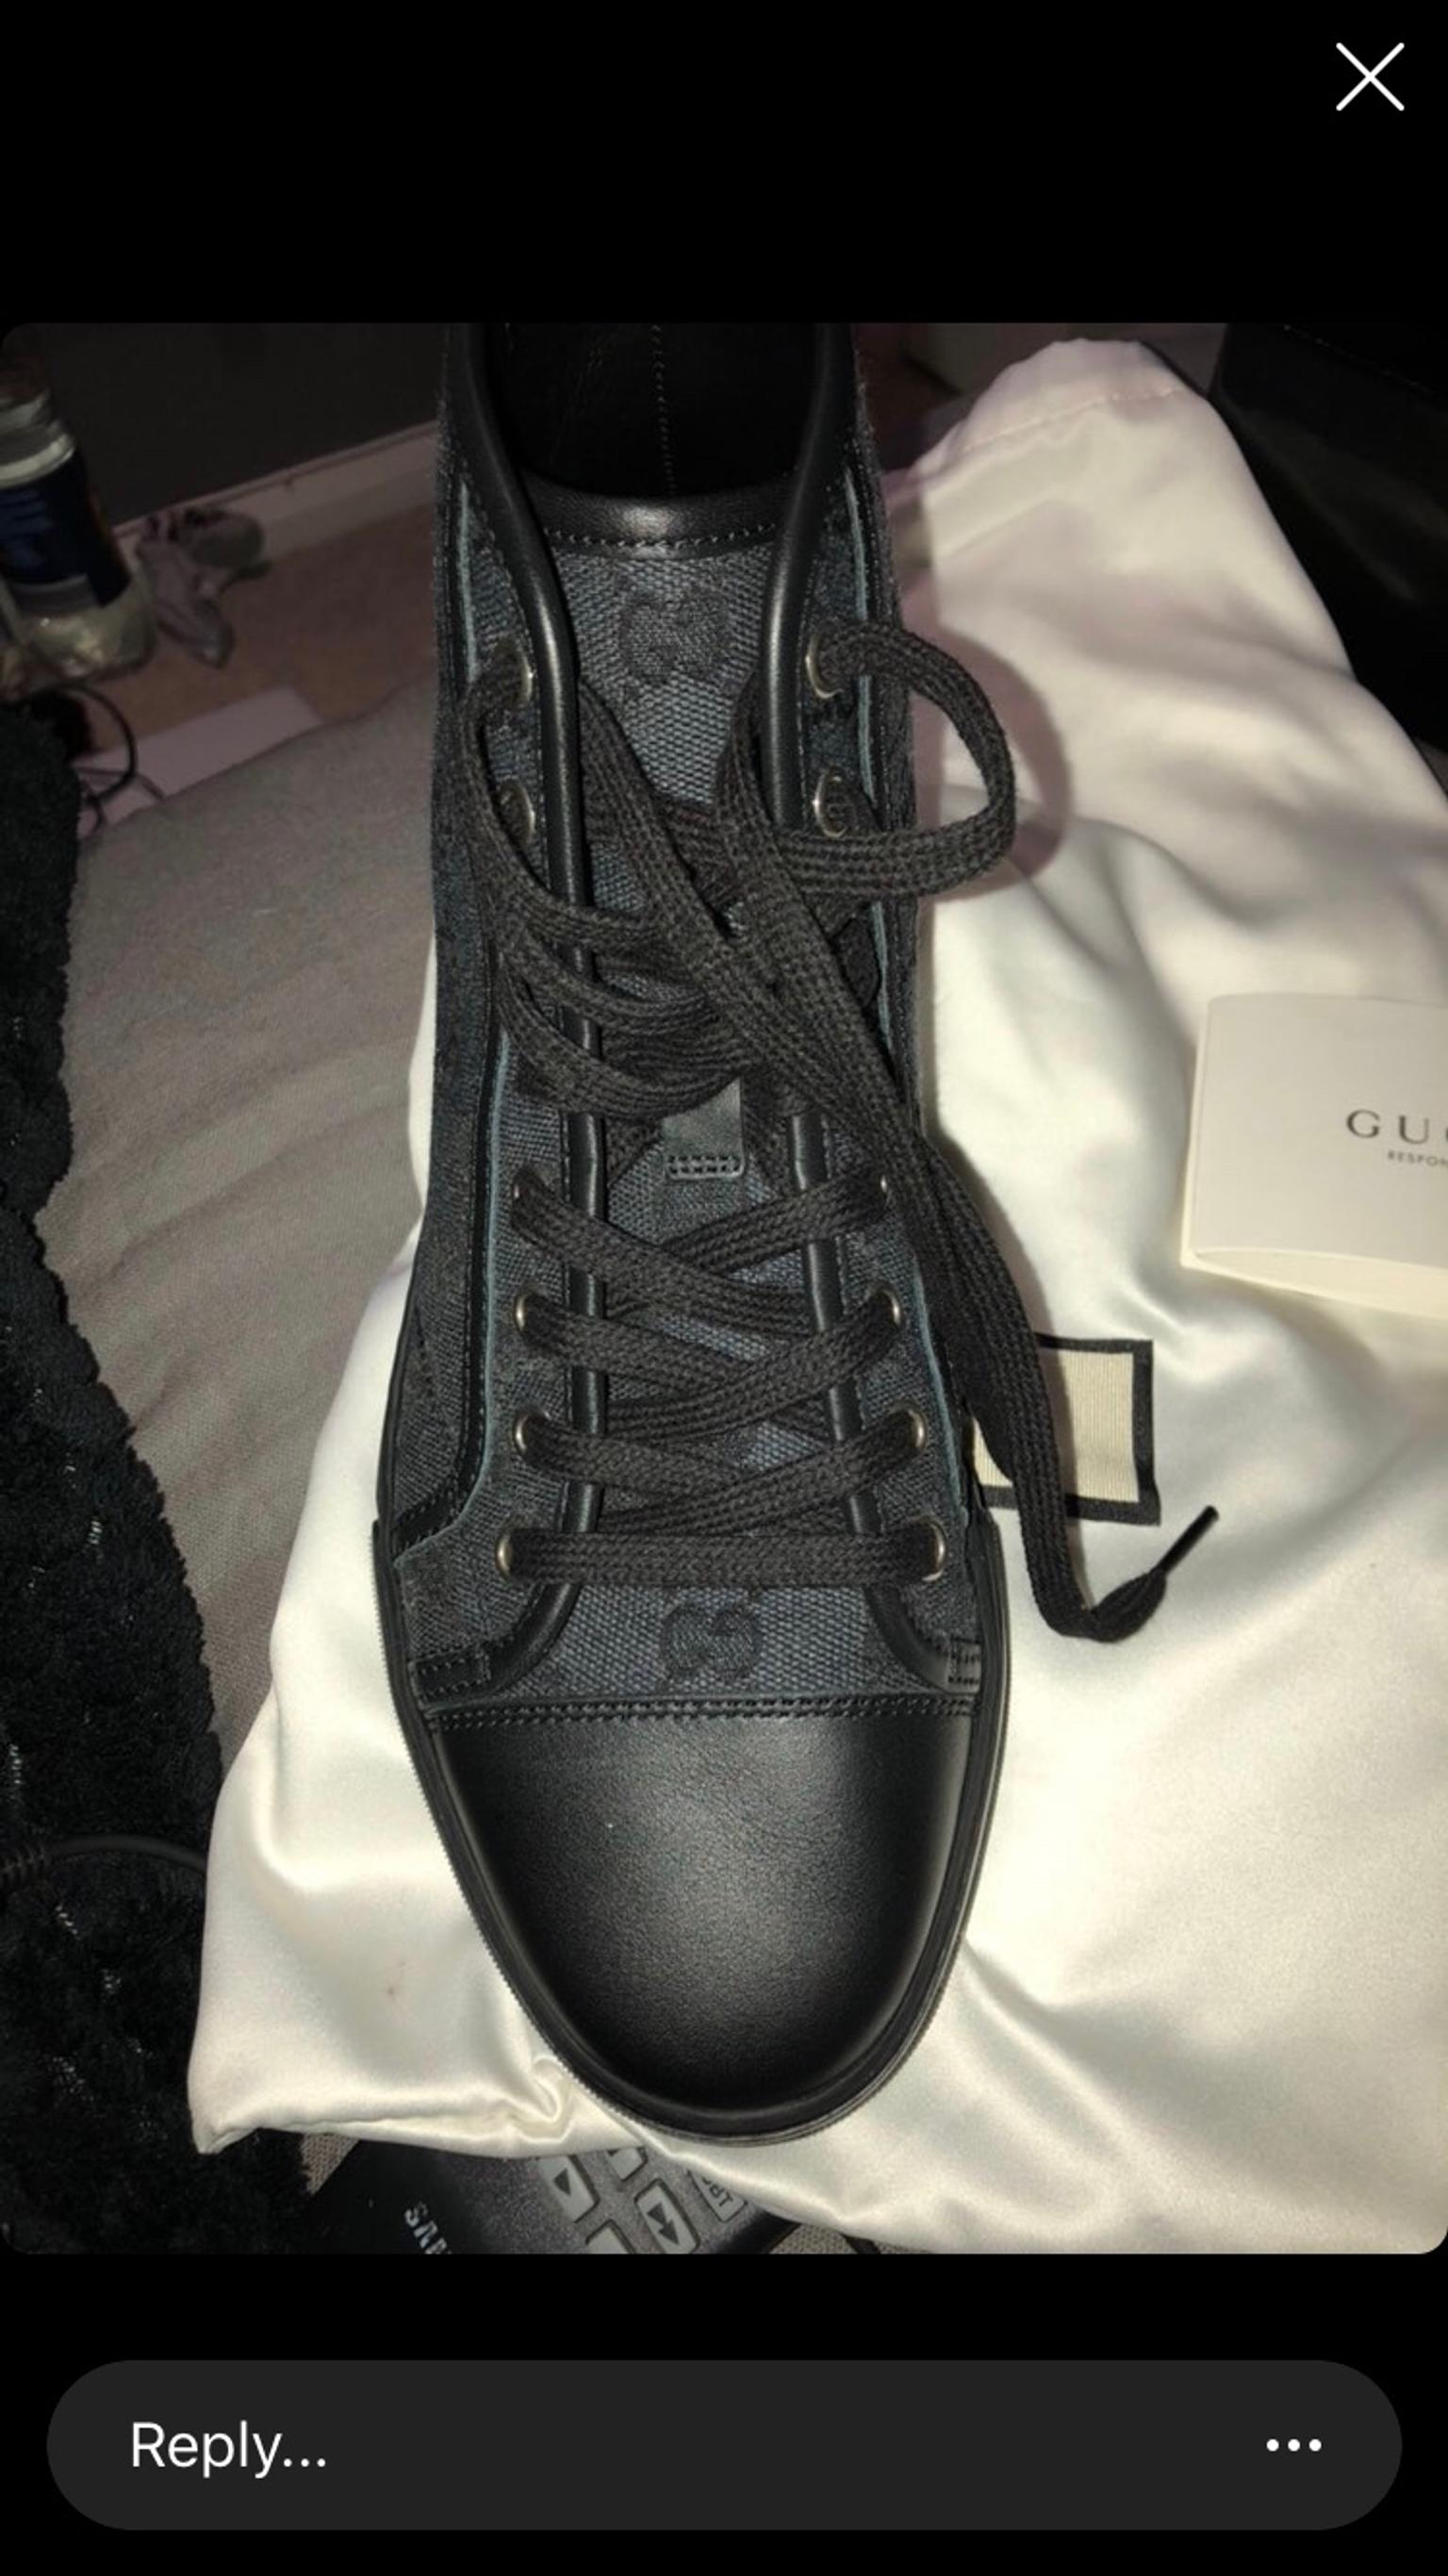 gucci shoes size 5.5